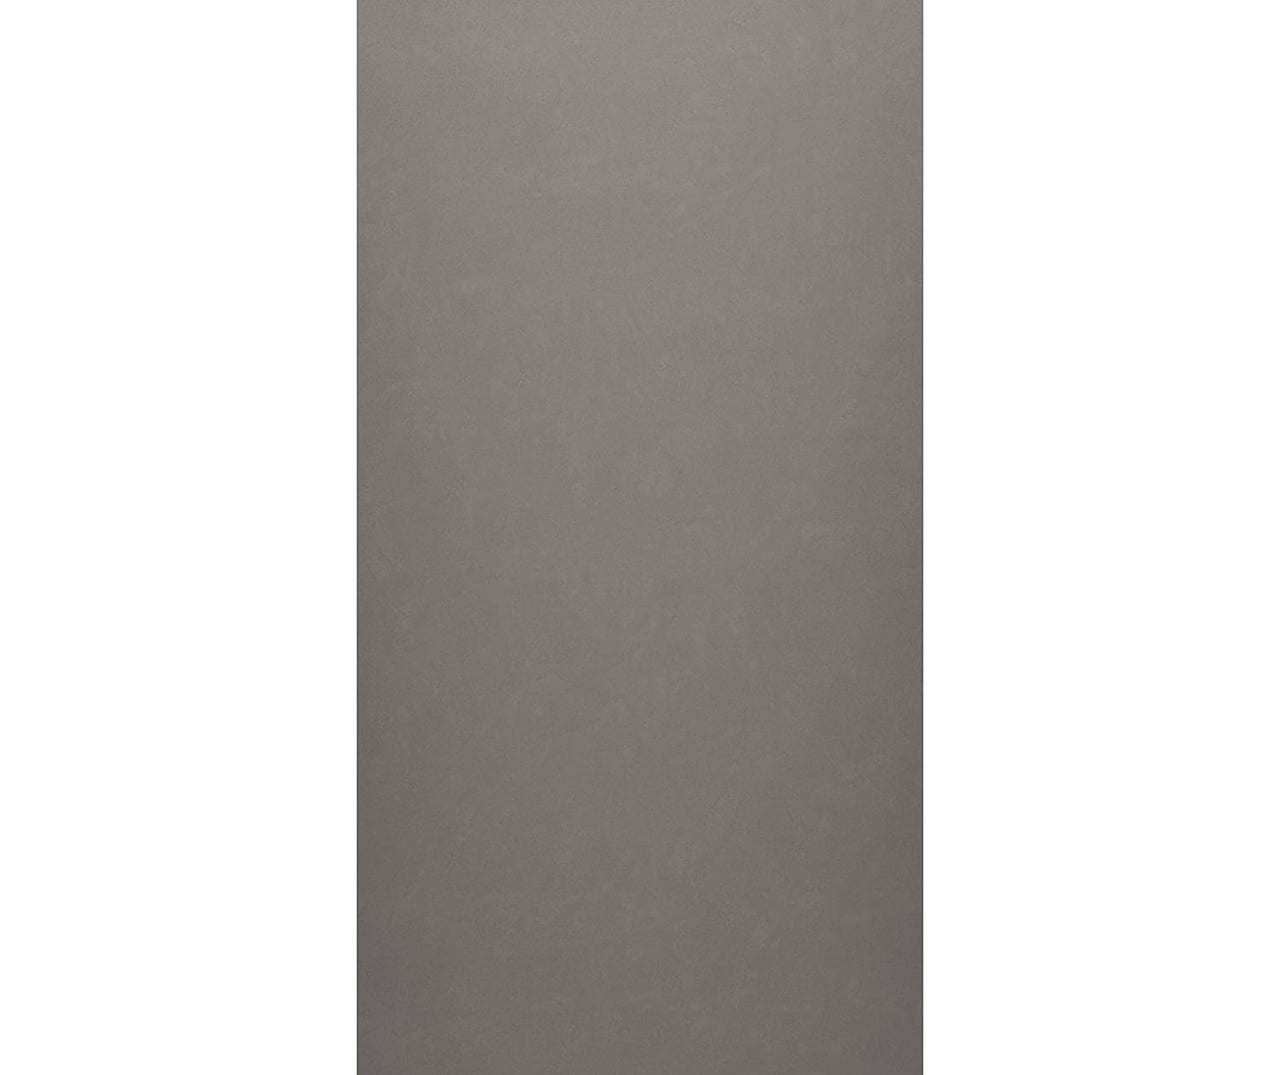 SMMK-7262-1 62 x 72 Swanstone Smooth Tile Glue up Bathtub and Shower Single Wall Panel  - BNGBath